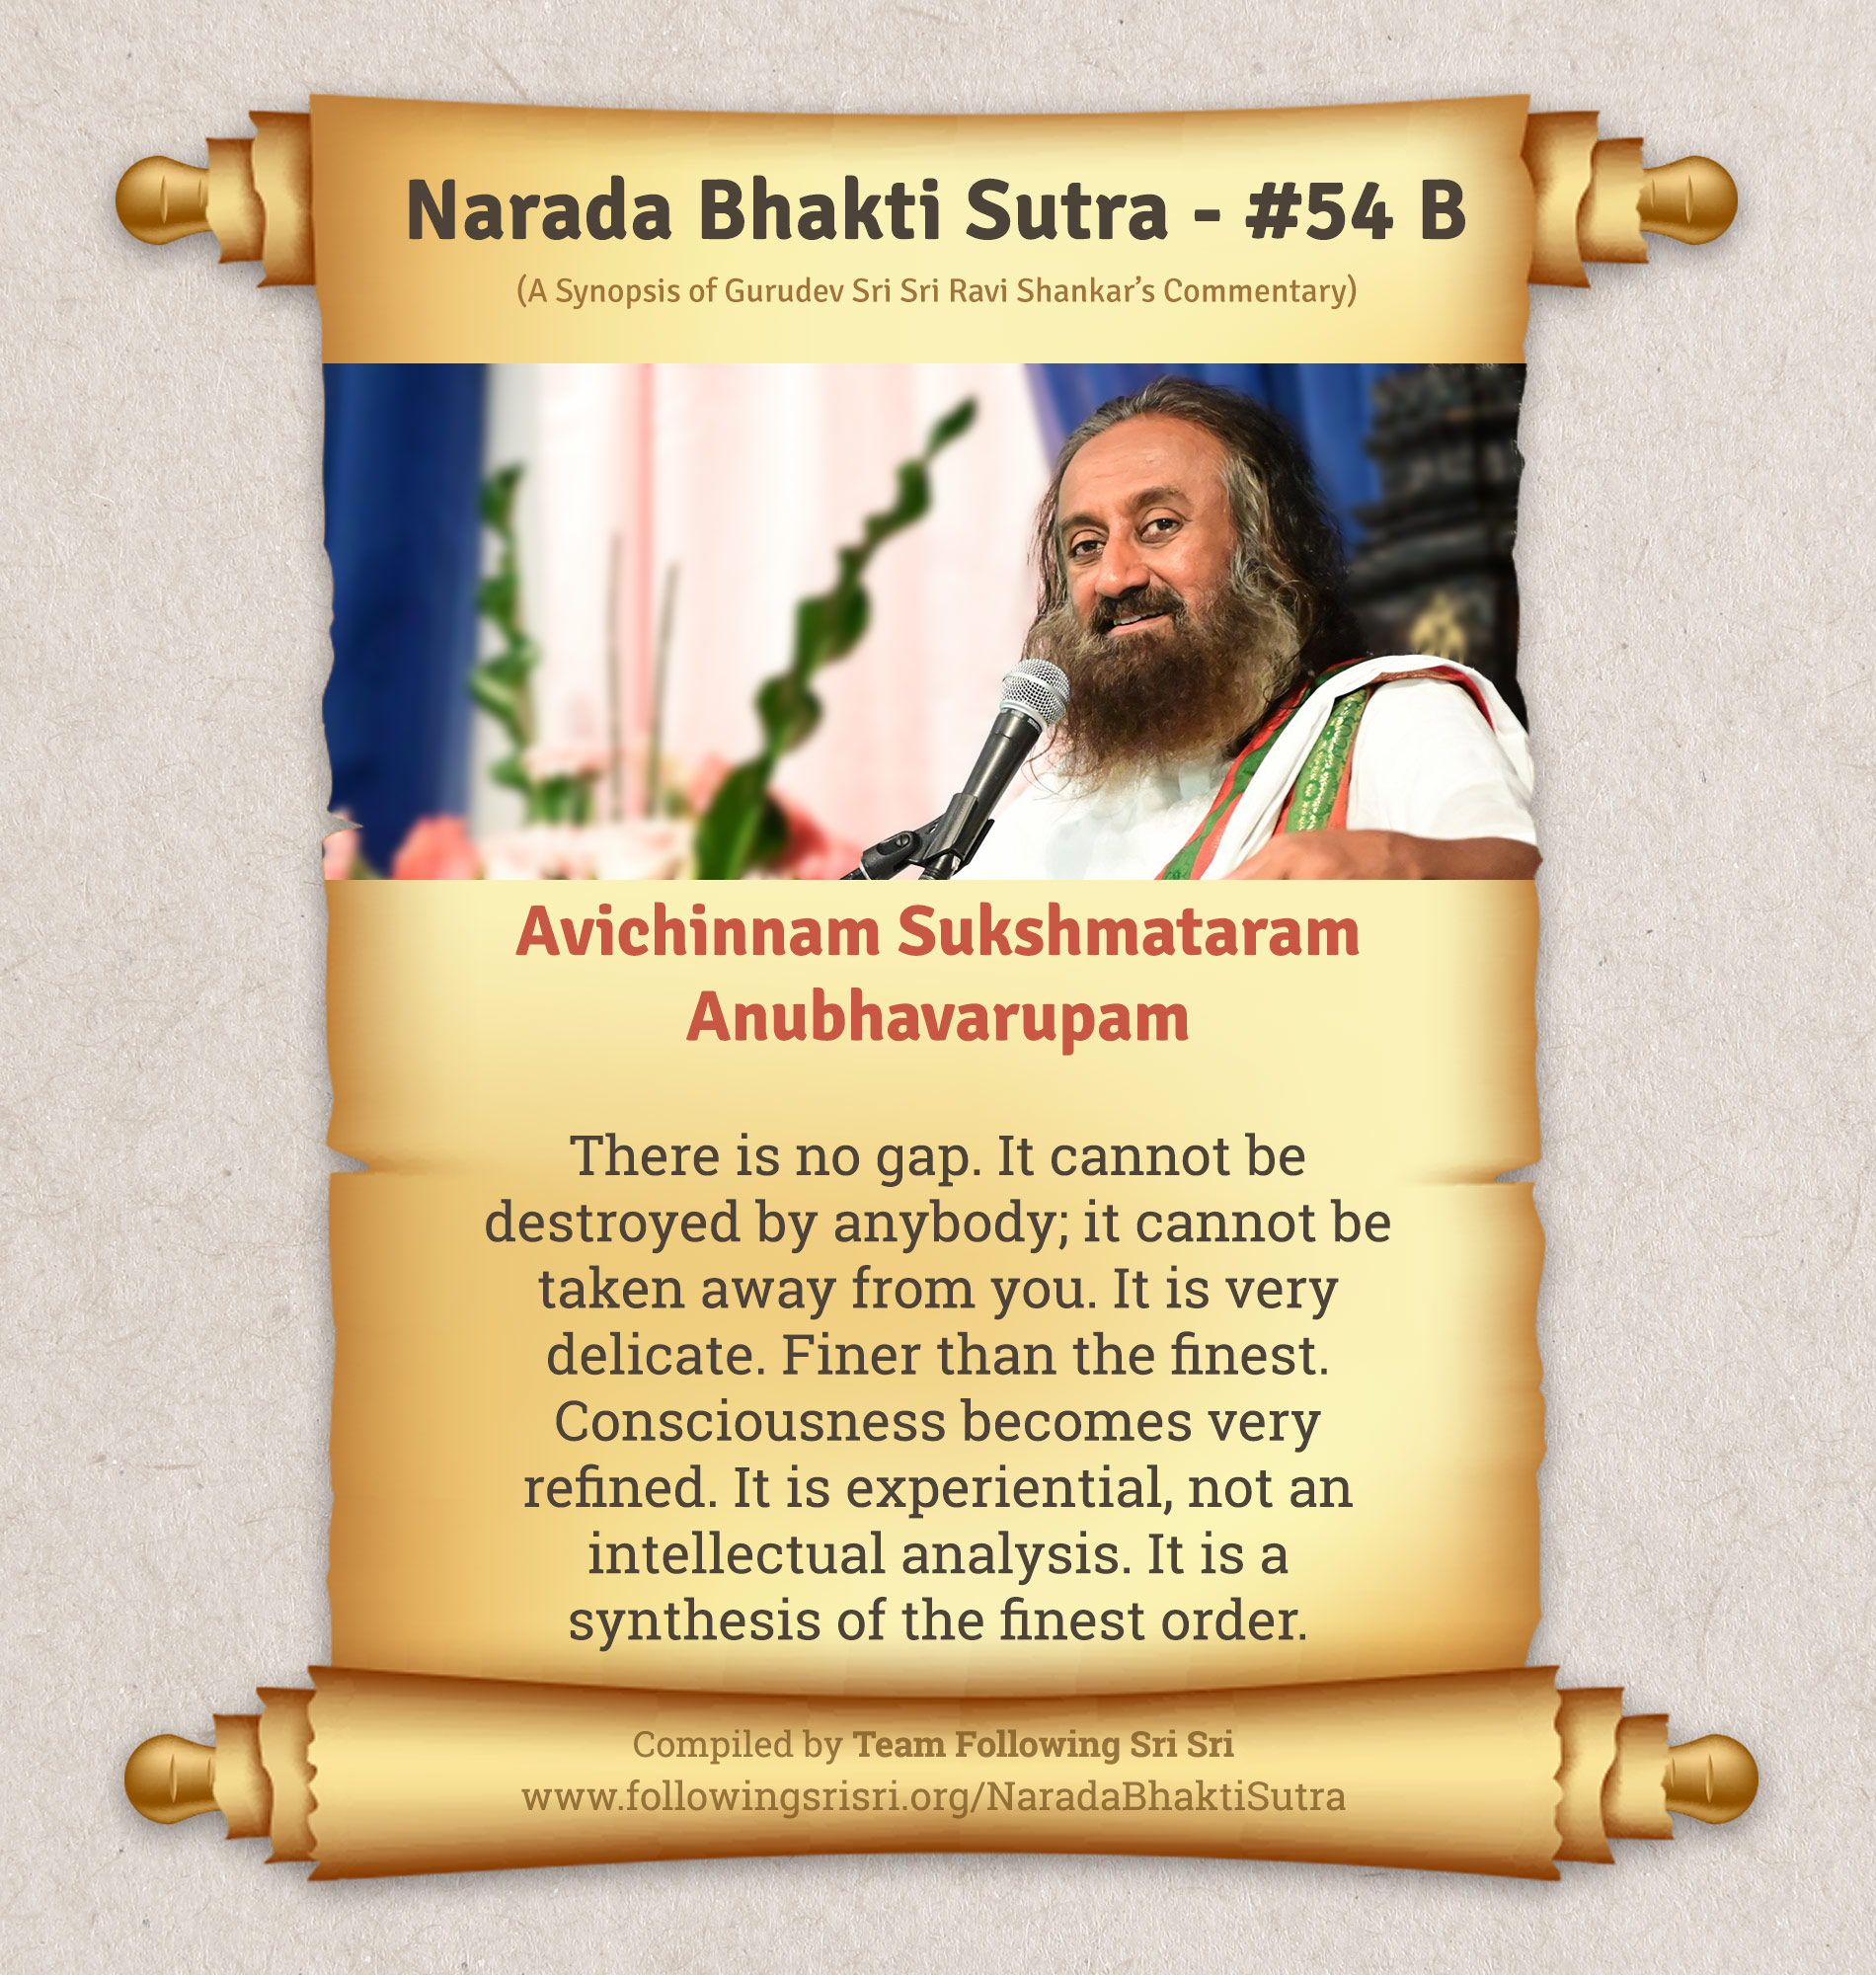 Narada Bhakti Sutras - Sutra 54 B